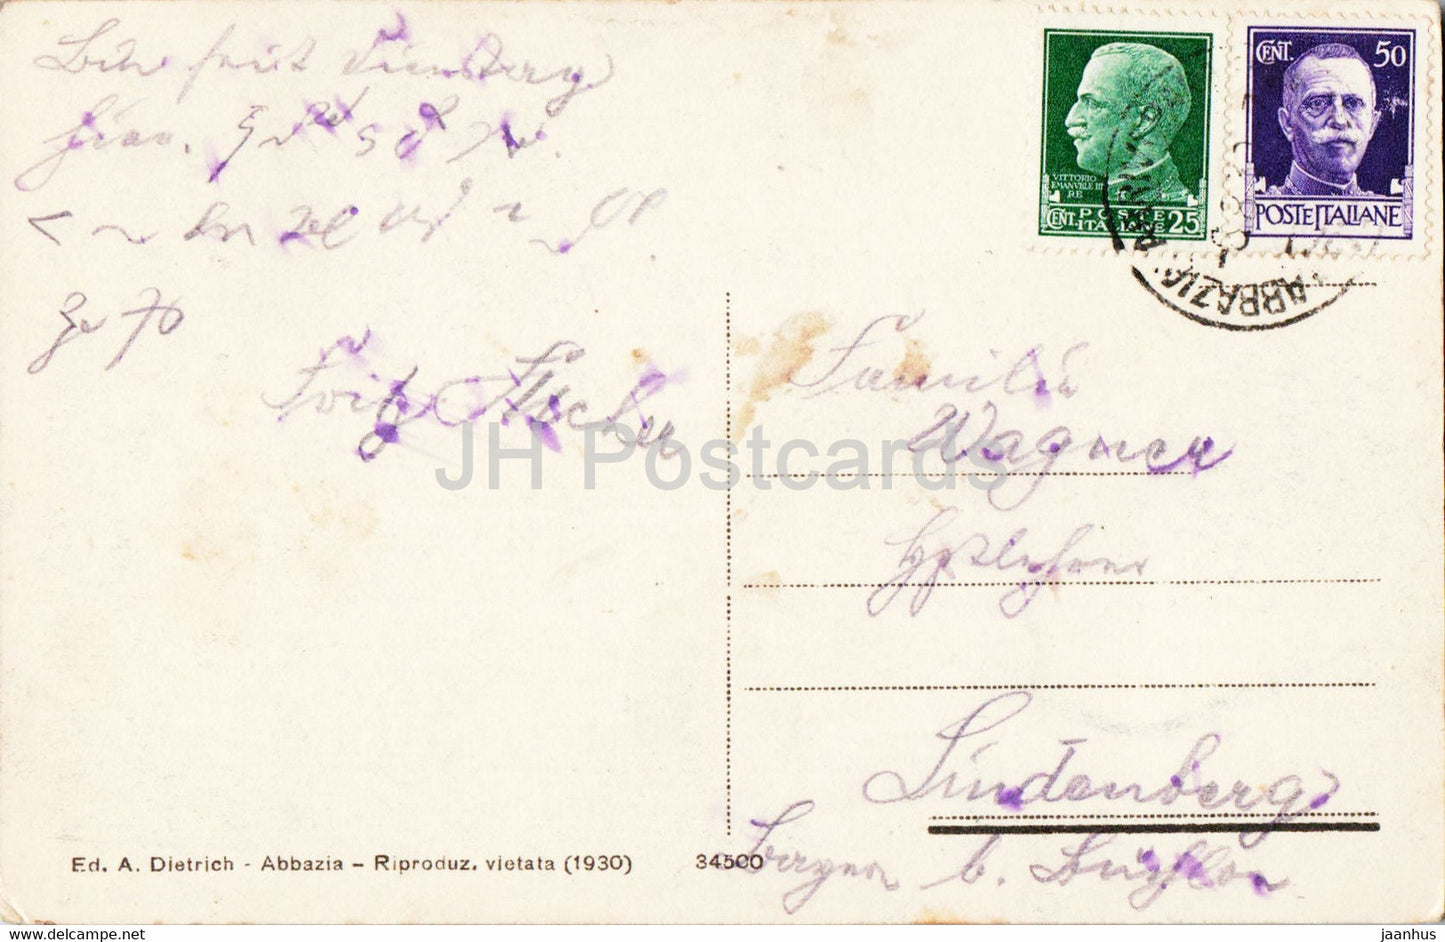 Abbazia - Opatija - Spiaggia australe - 34500 - carte postale ancienne - Croatie - occasion